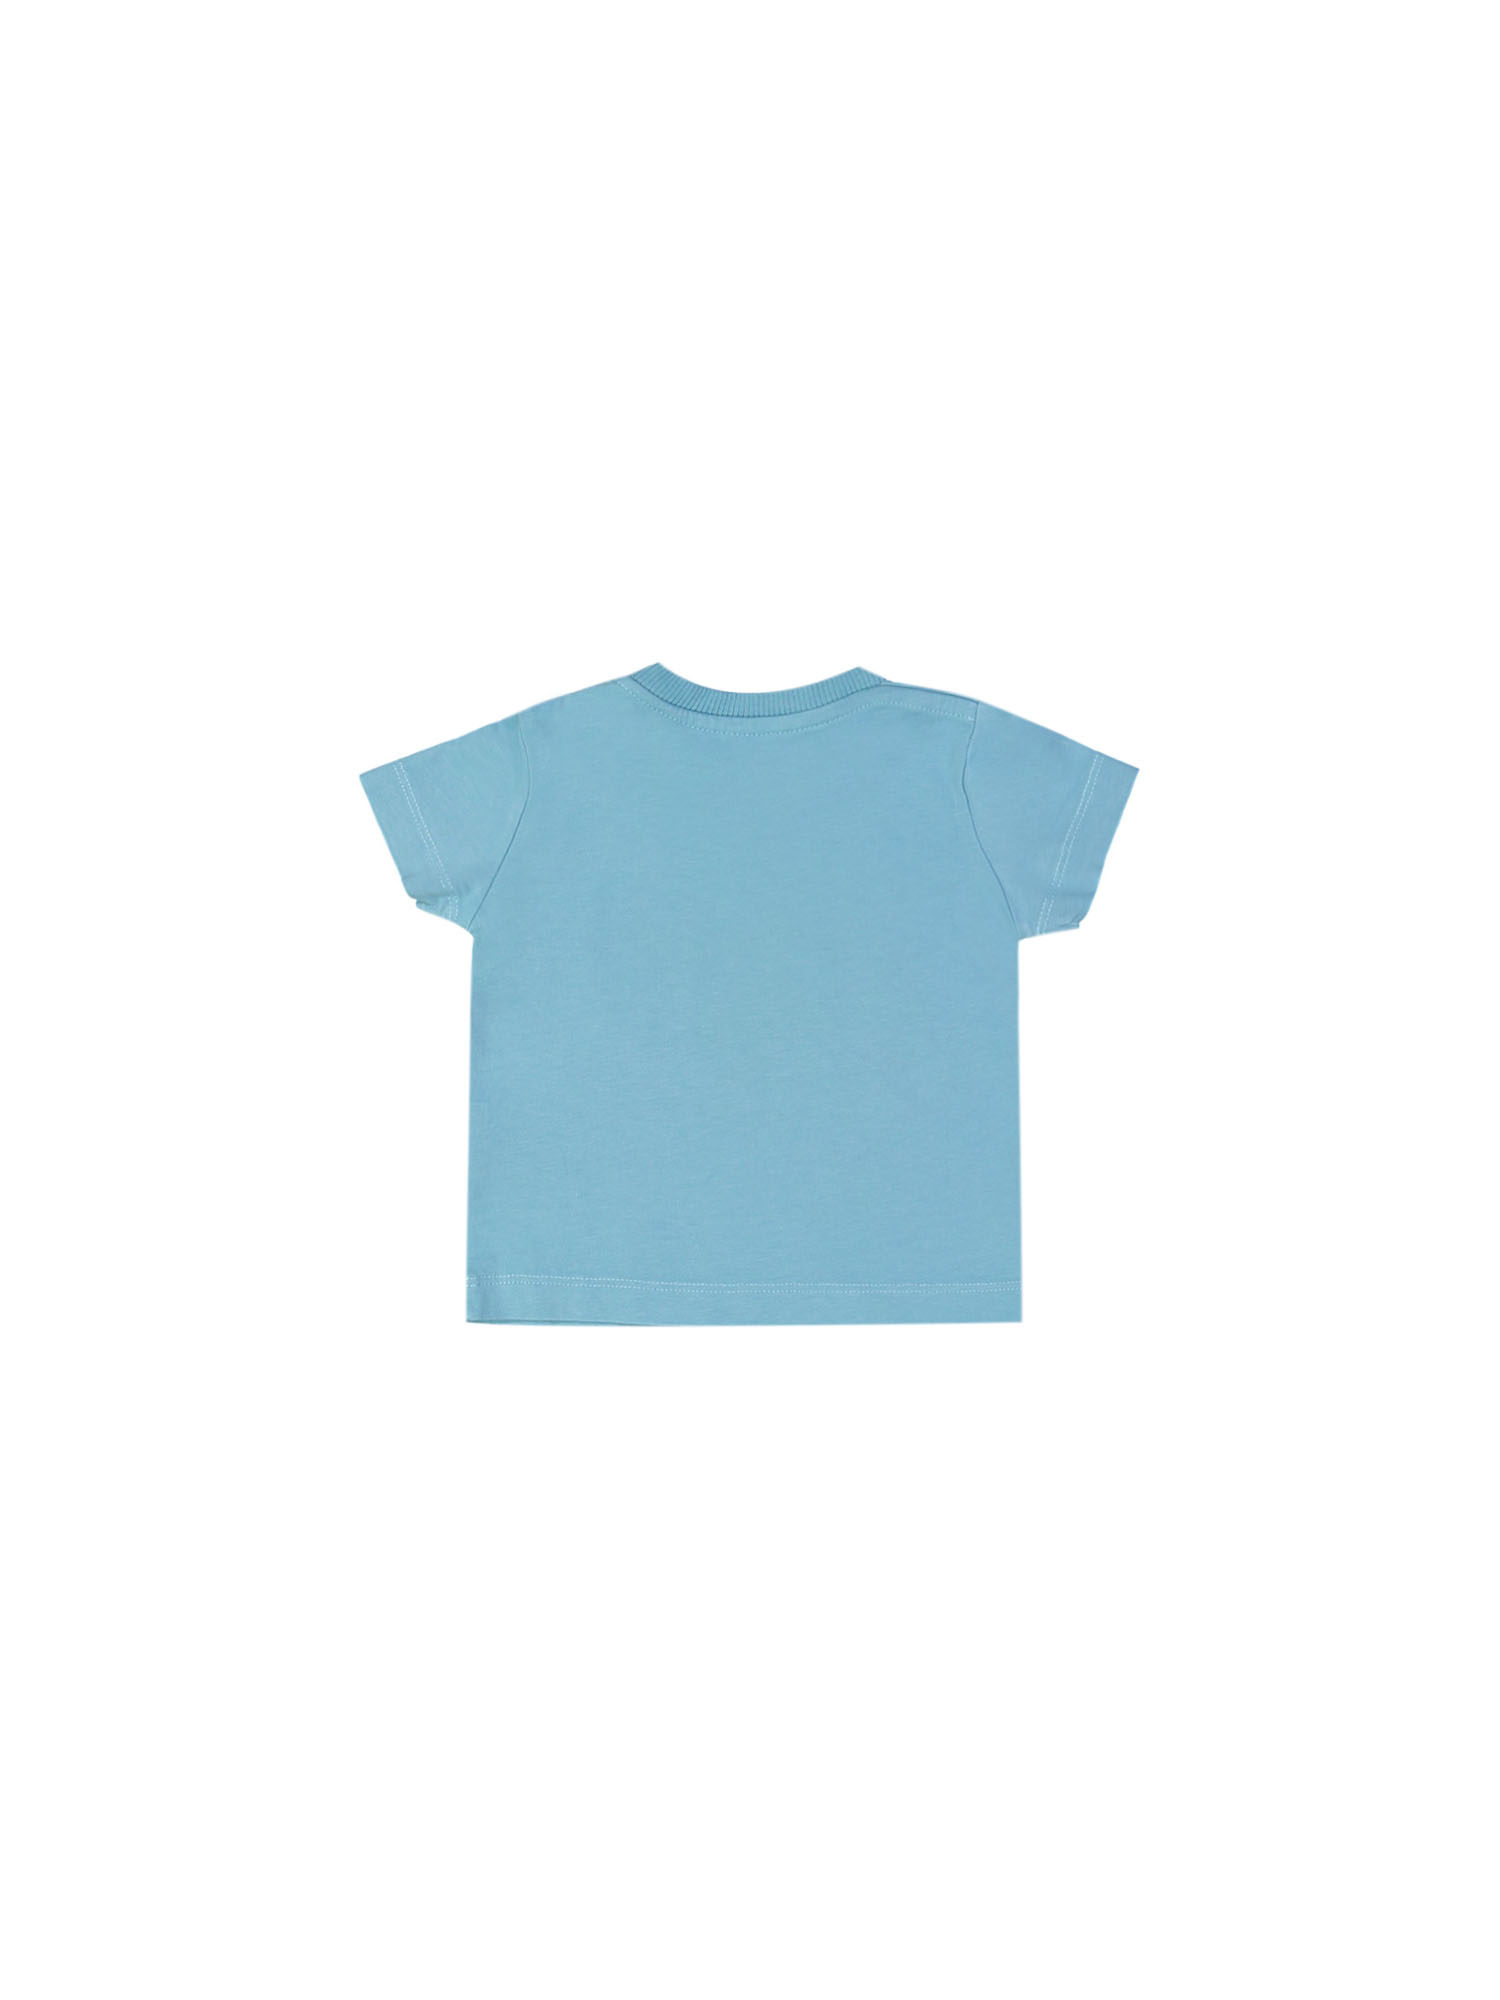 t-shirt mini trophy grey blue